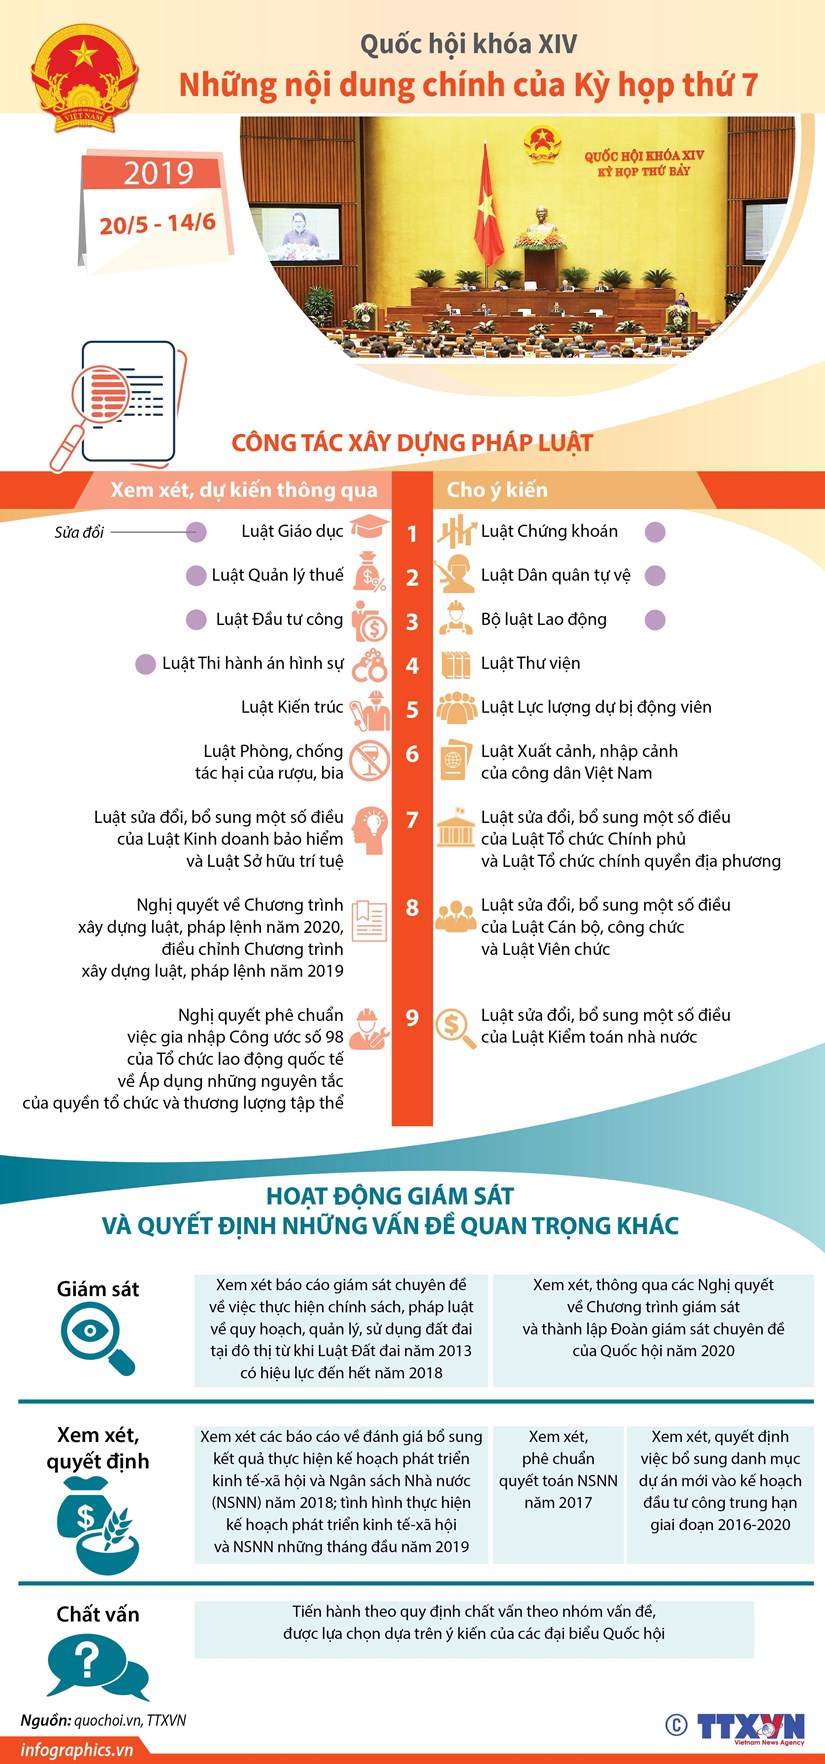 [Infographics] Noi dung chinh cua Ky hop thu 7, Quoc hoi khoa XIV hinh anh 1